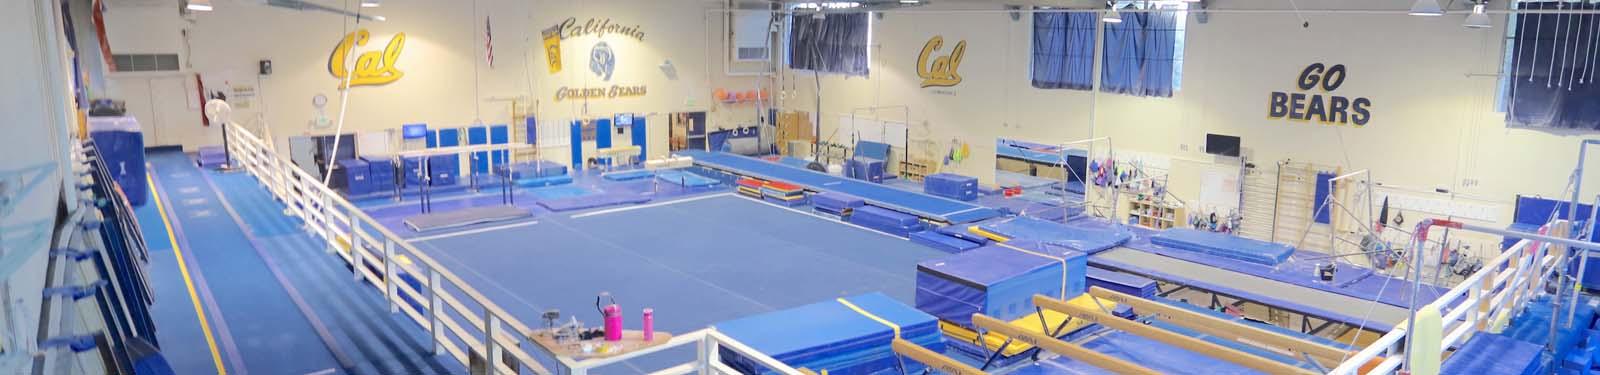 Cal Cms Gymnastics Landing Image Header Image